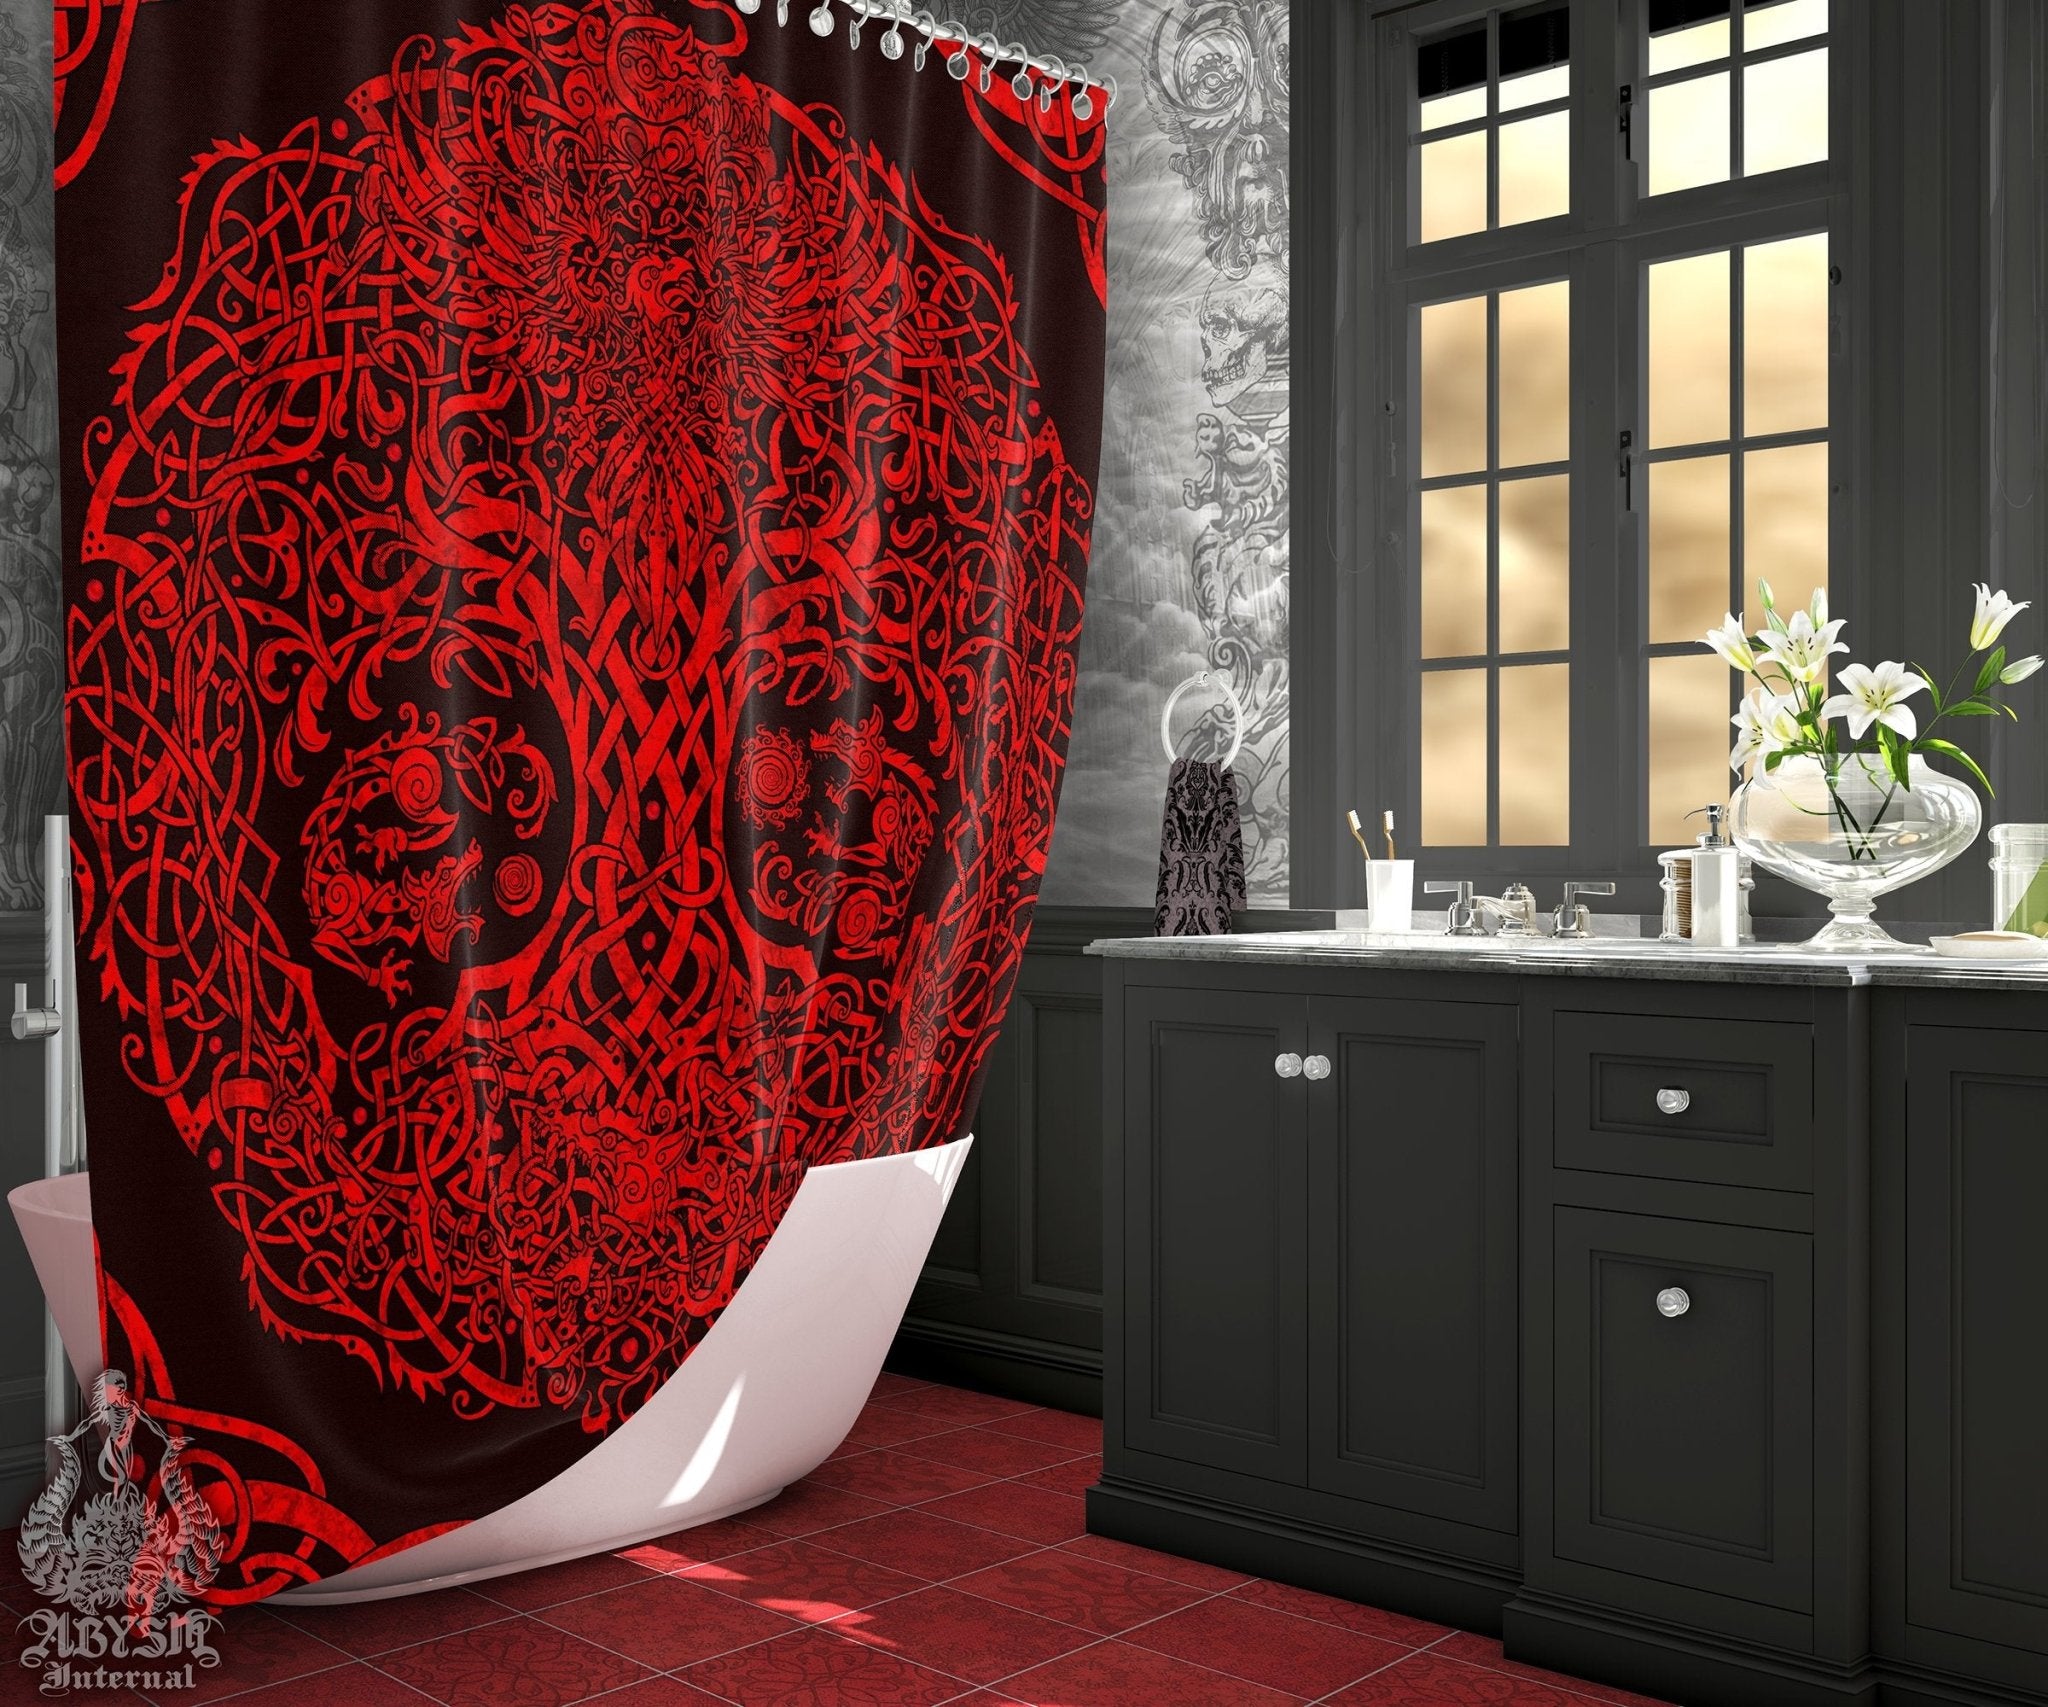 Viking Shower Curtain, Yggdrasil, Norse, Gothic Bathroom Decor, Tree of Life - Black & Red - Abysm Internal